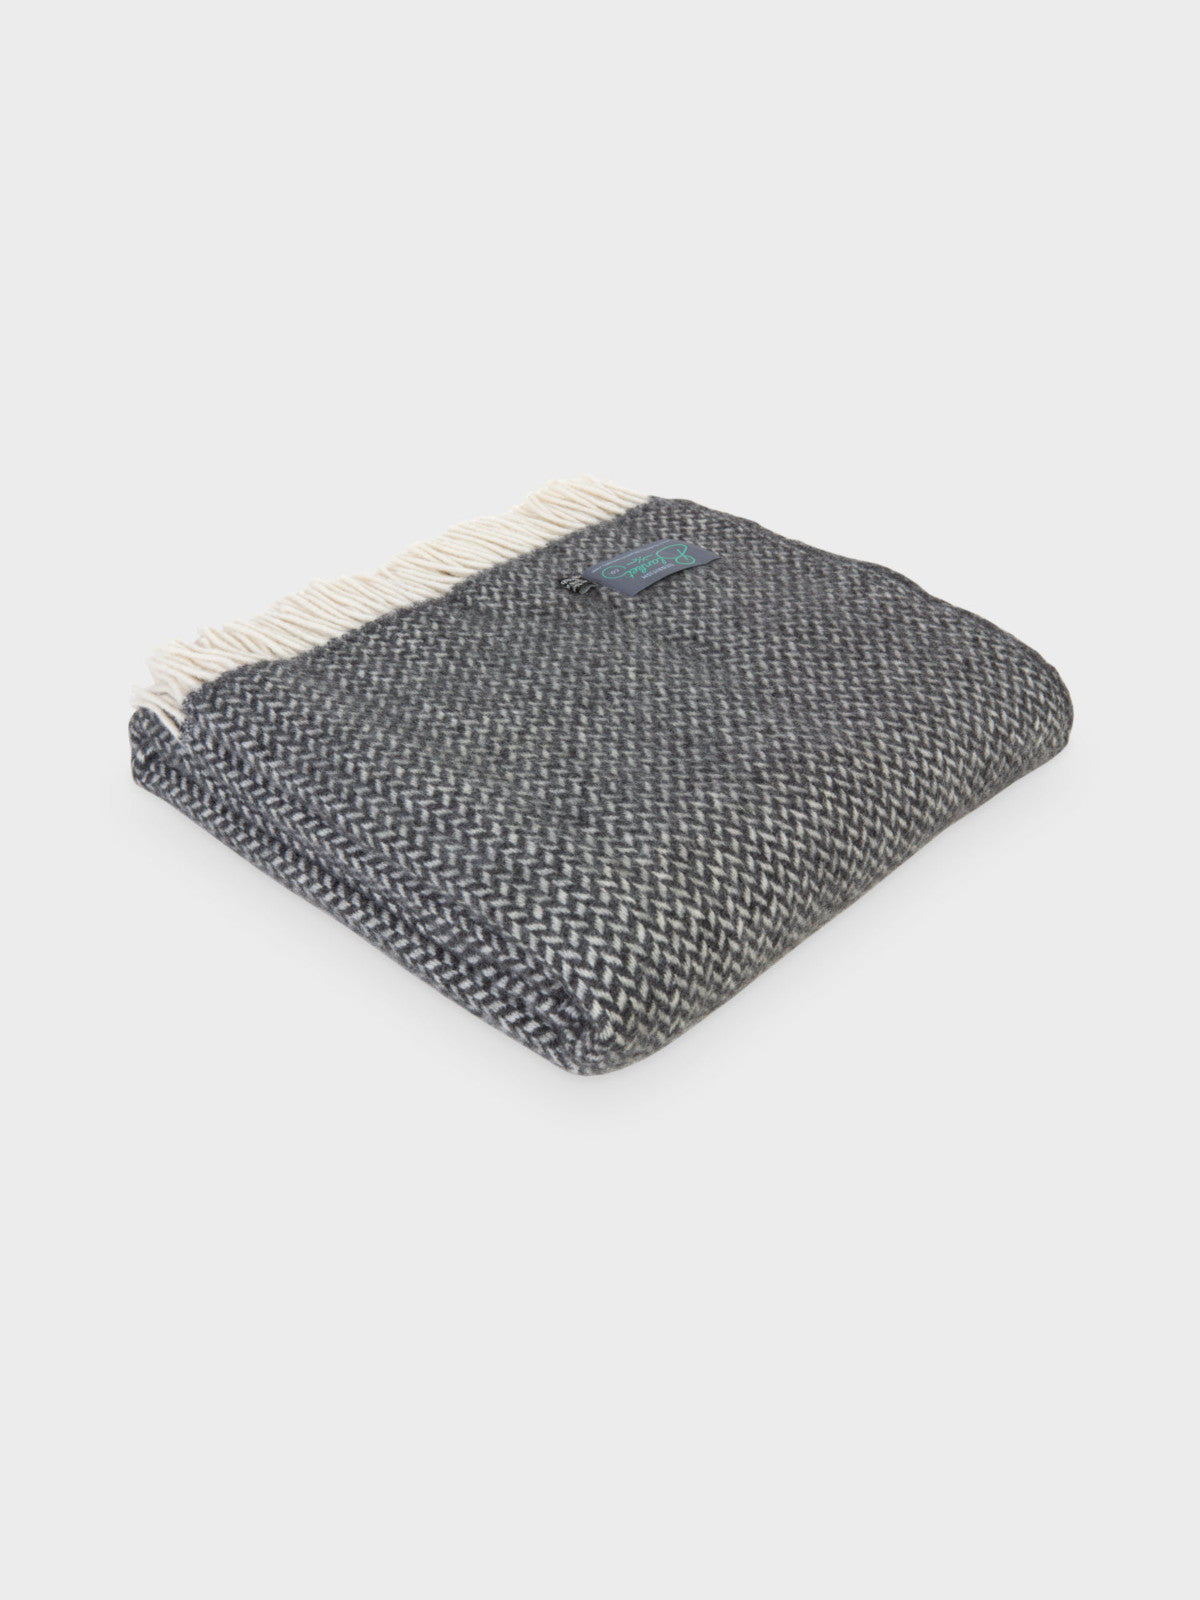 A folded grey herringbone wool throw by The British Blanket Company.